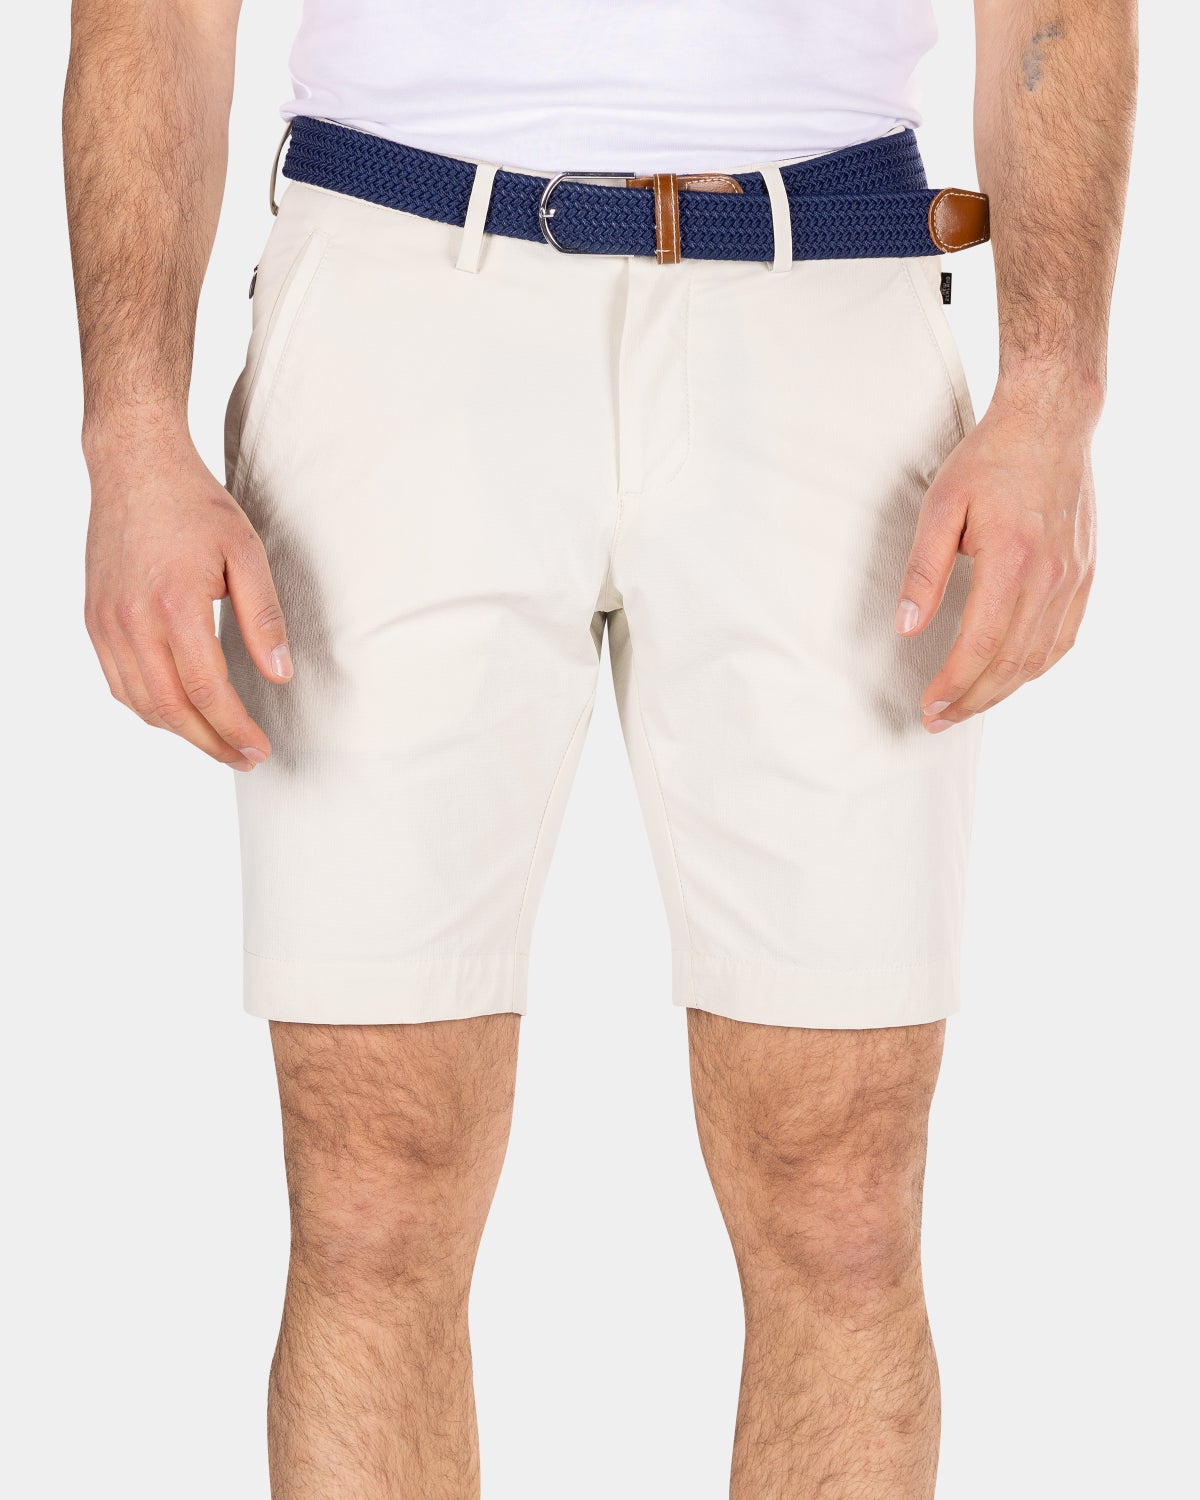 Dressed shorts - Cream